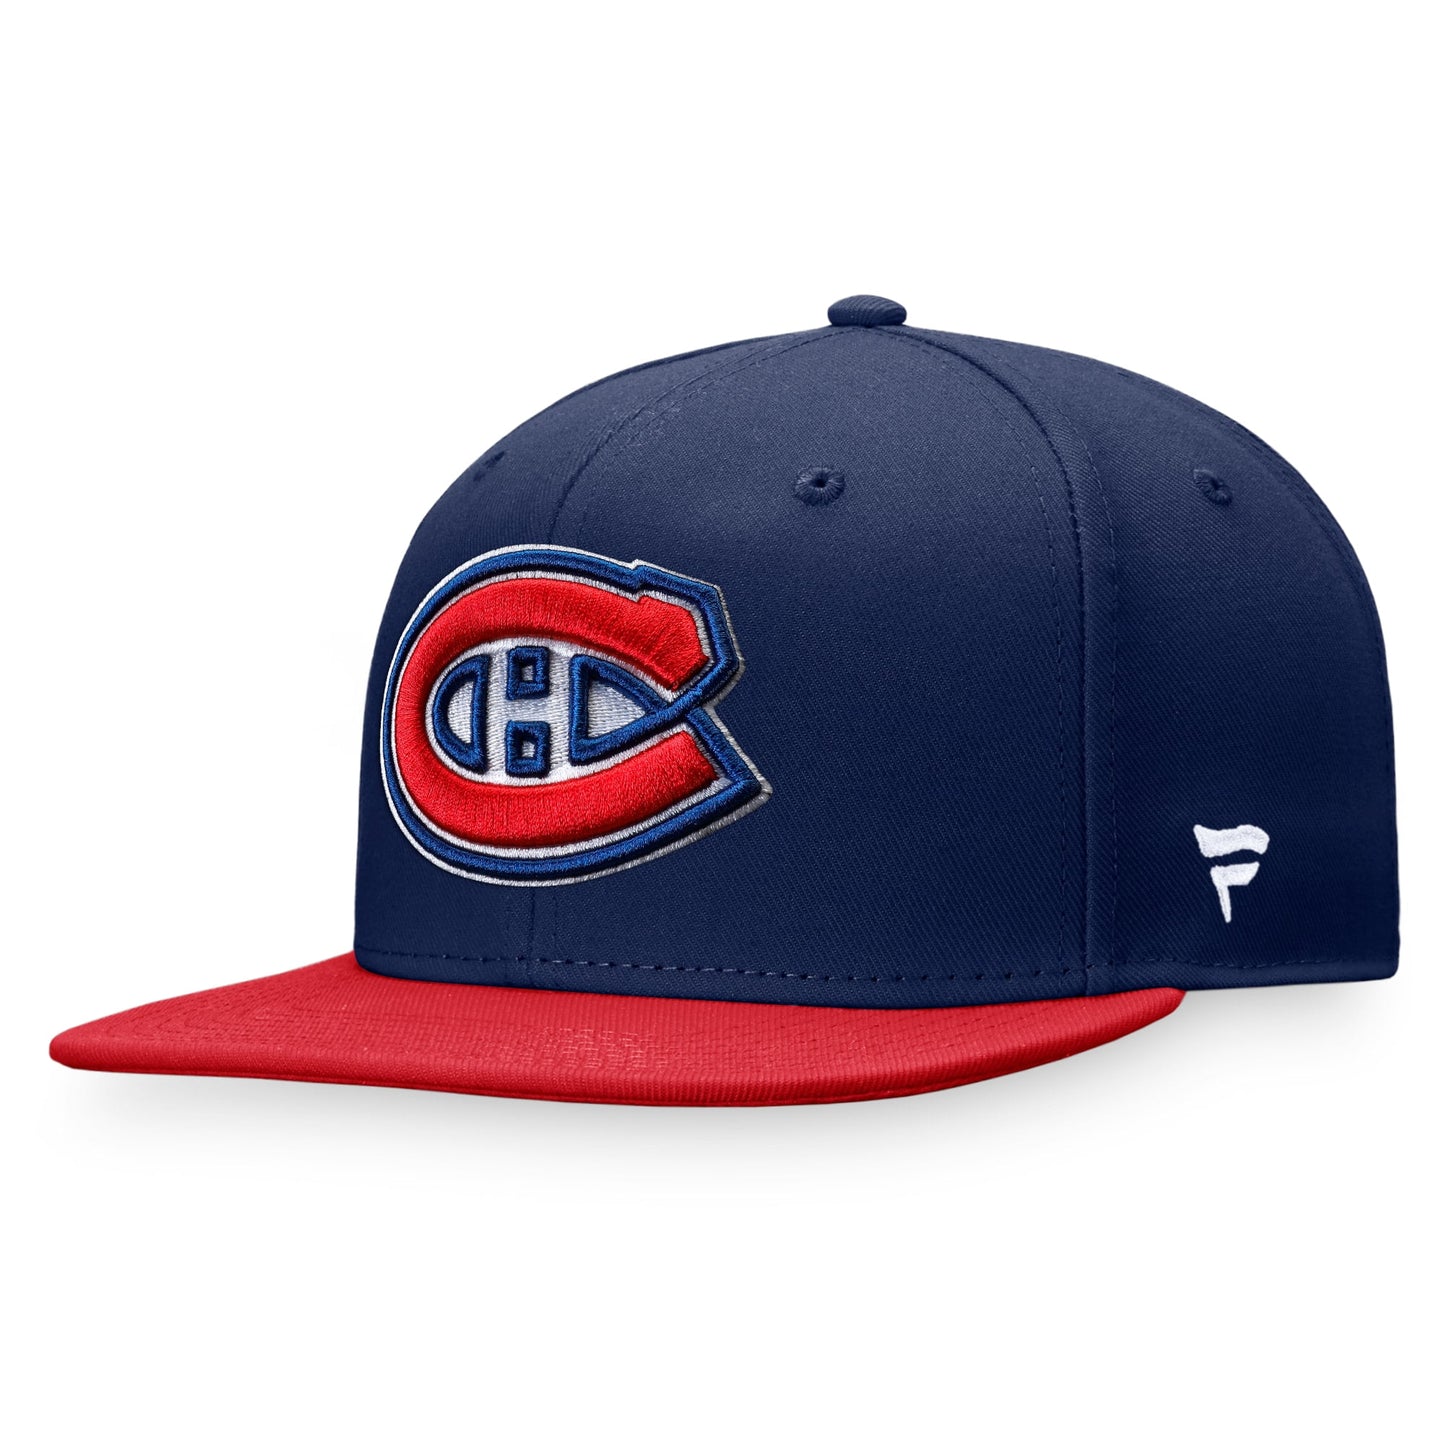 Men's Fanatics Branded Navy/Red Montreal Canadiens Core Primary Logo Snapback Adjustable Hat - OSFA